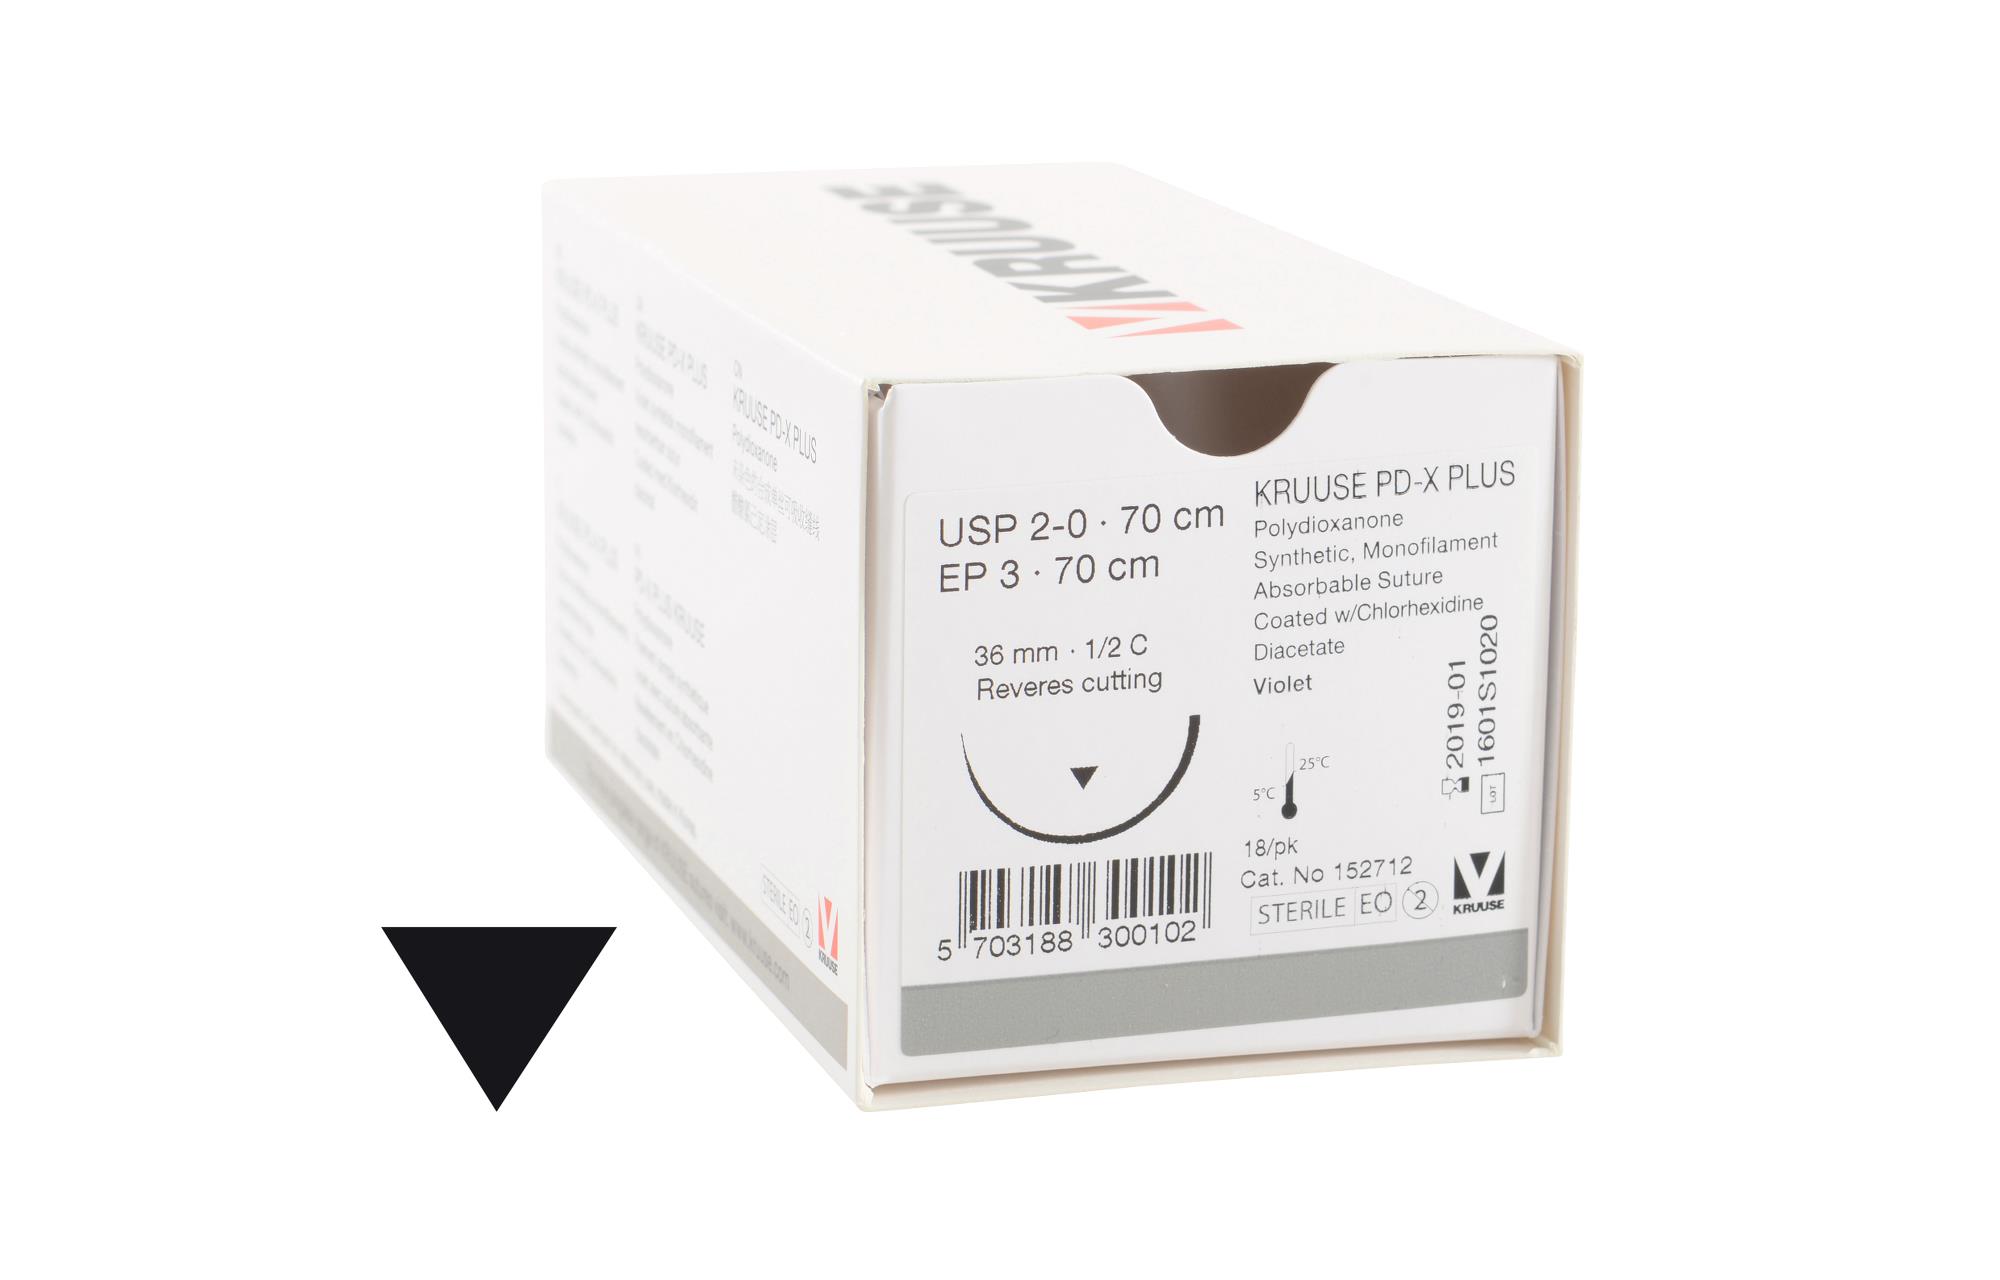 KRUUSE PD-X Plus suture, USP 2-0, 70 cm, 36 mm needle, ½ RC, 18/pk